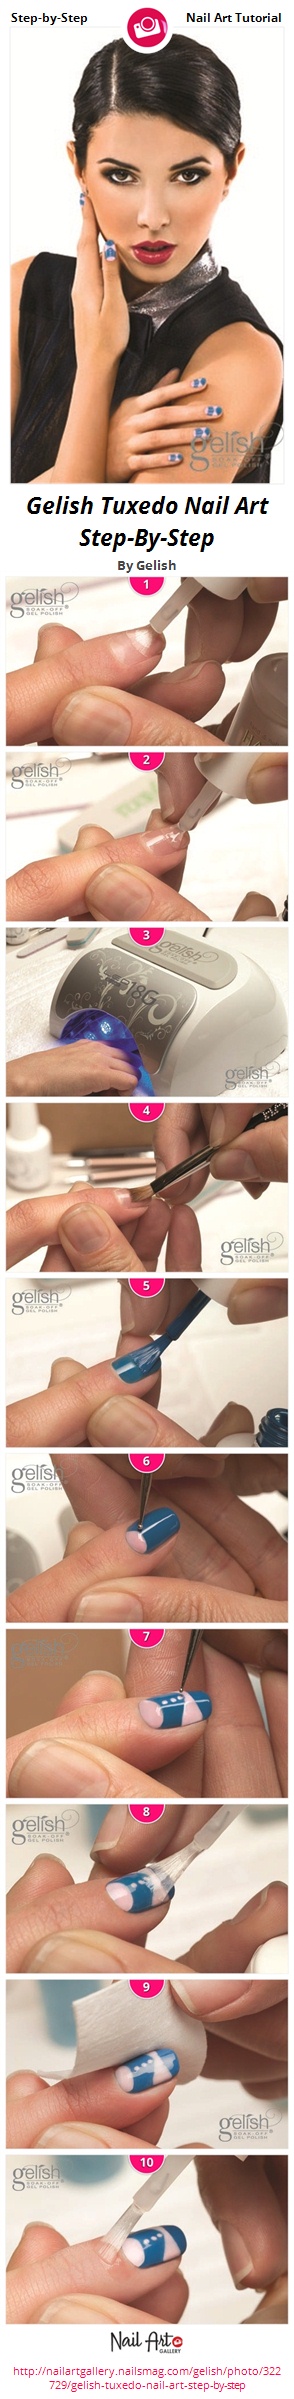 Gelish Tuxedo Nail Art Step-By-Step - Nail Art Gallery